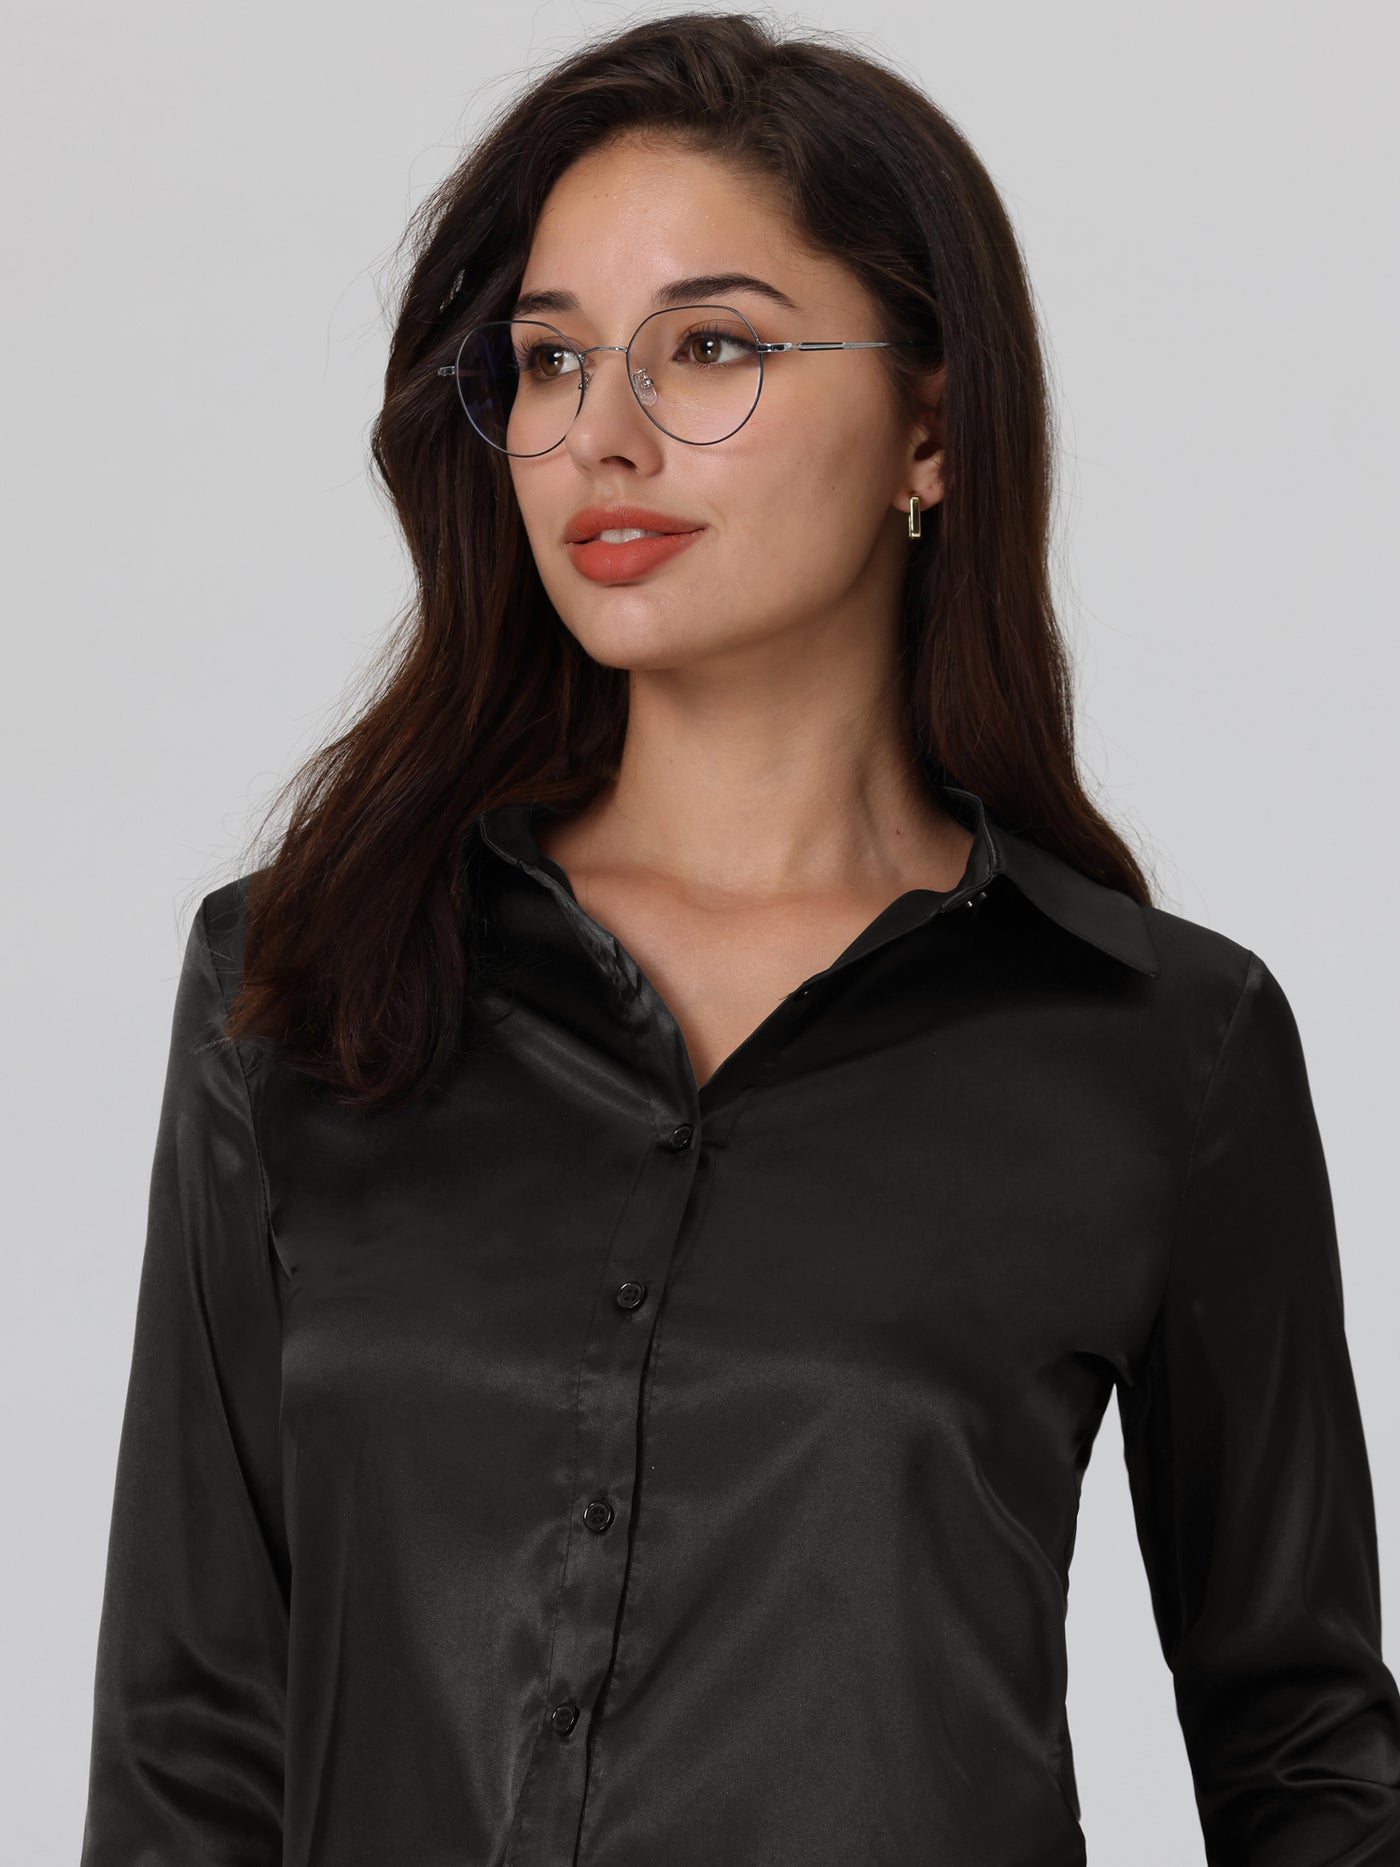 Bublédon Women's Work Shirt Long Sleeves Button Down Silky Satin Blouse